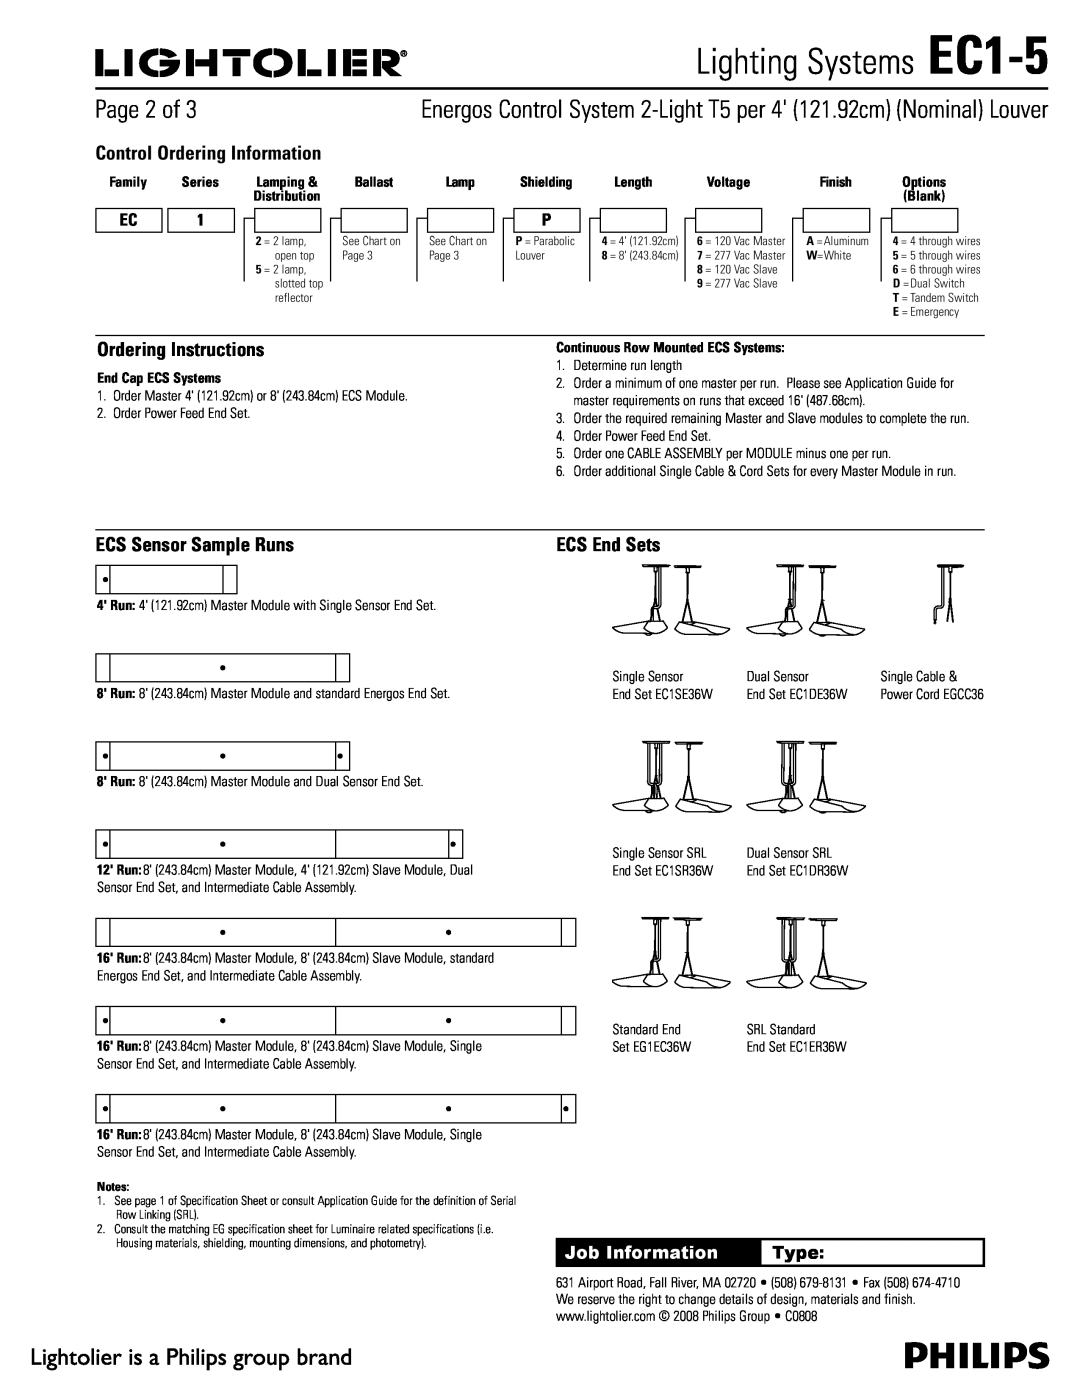 Lightolier EC1-5 Page 2 of, Control Ordering Information, Ordering Instructions, ECS Sensor Sample Runs, Type 